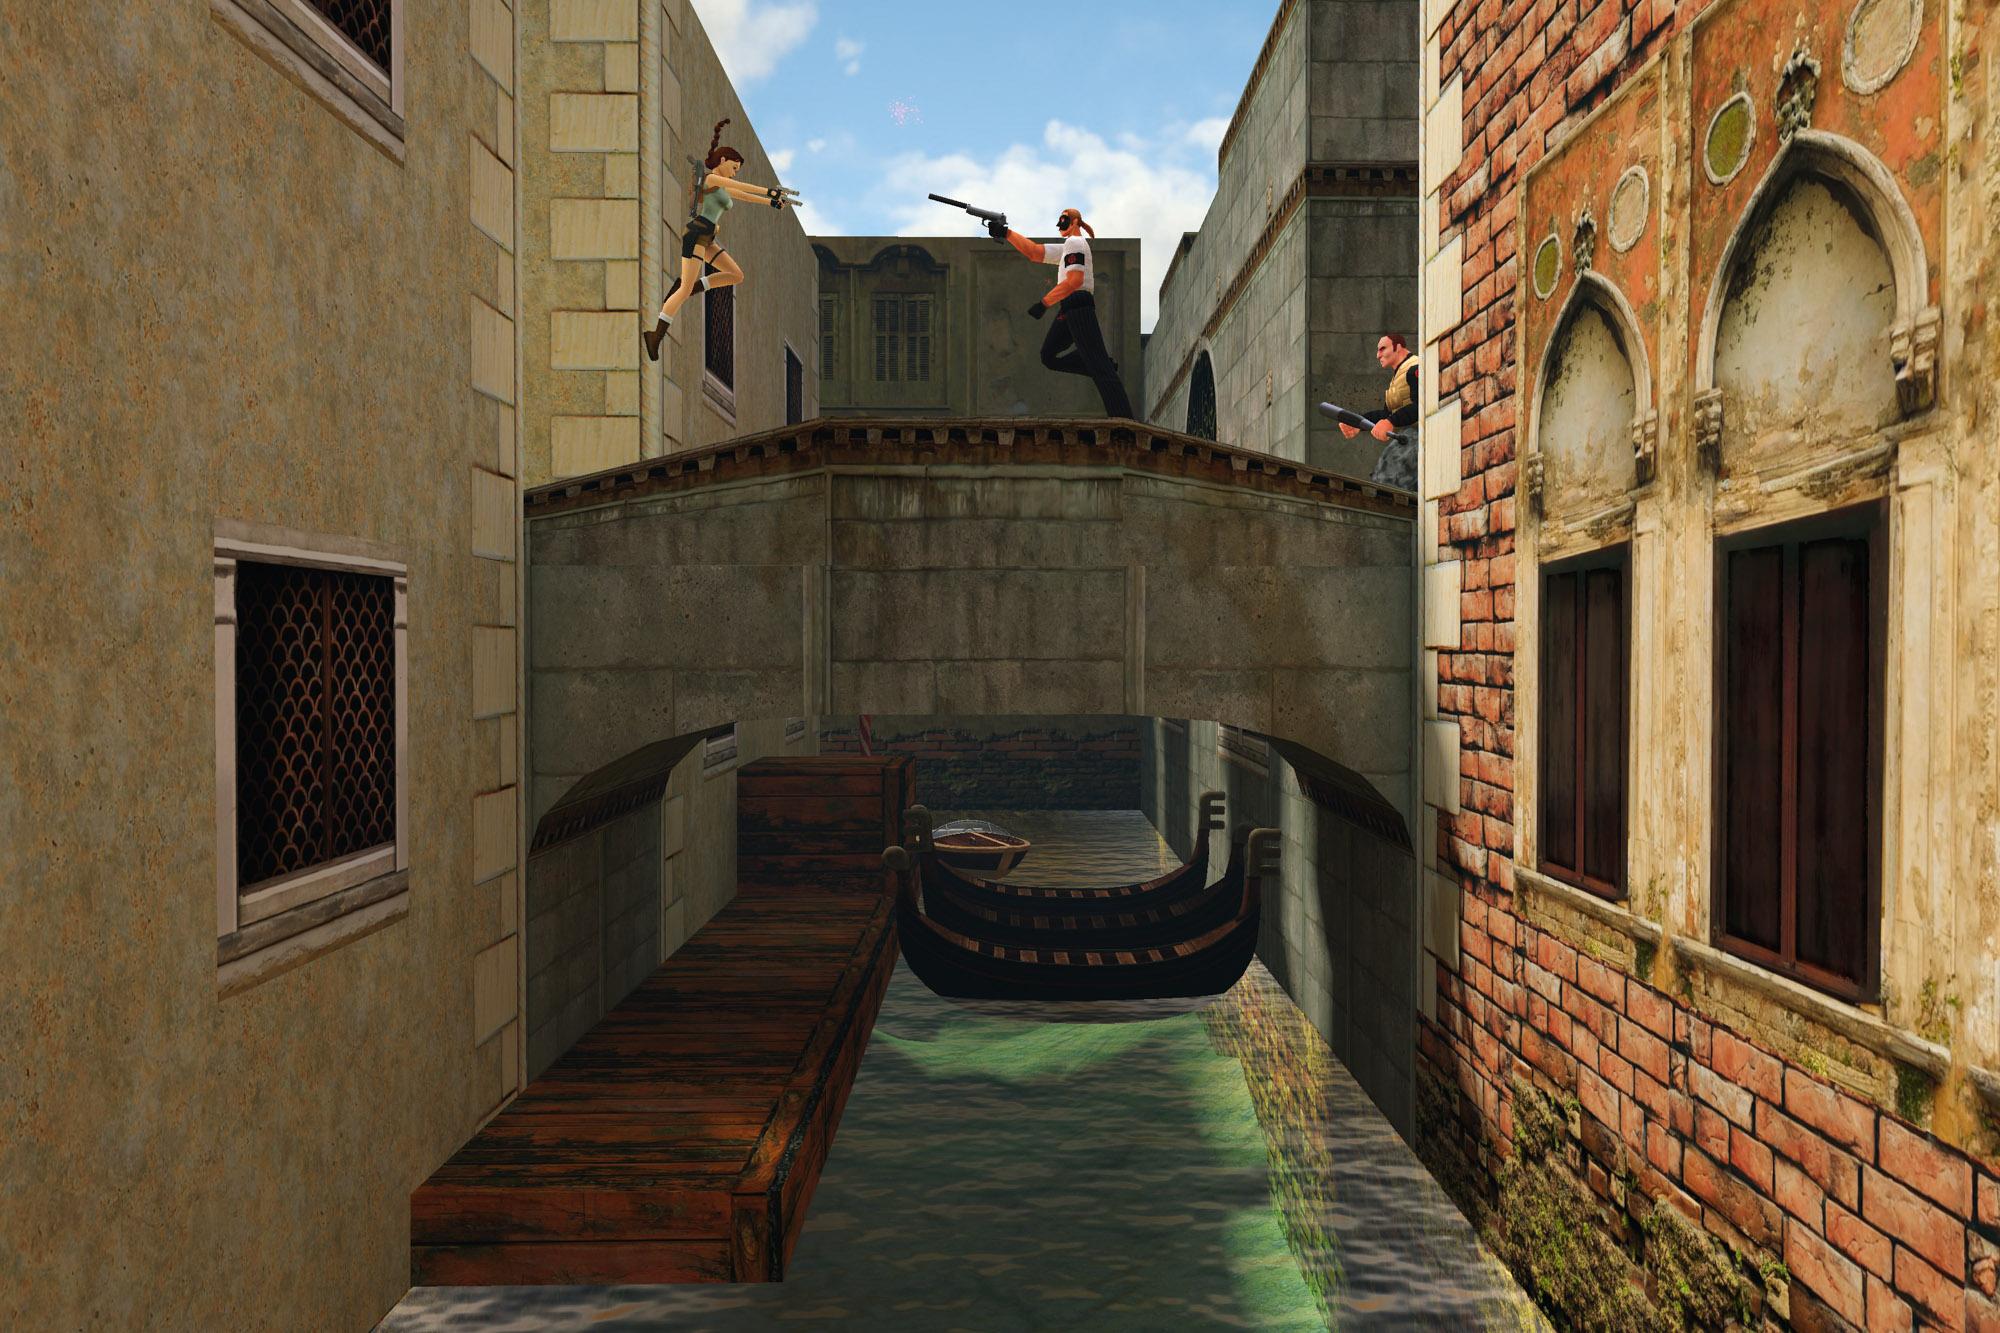 Lara Croft fighting the Fiamma Nera goons in Venice.